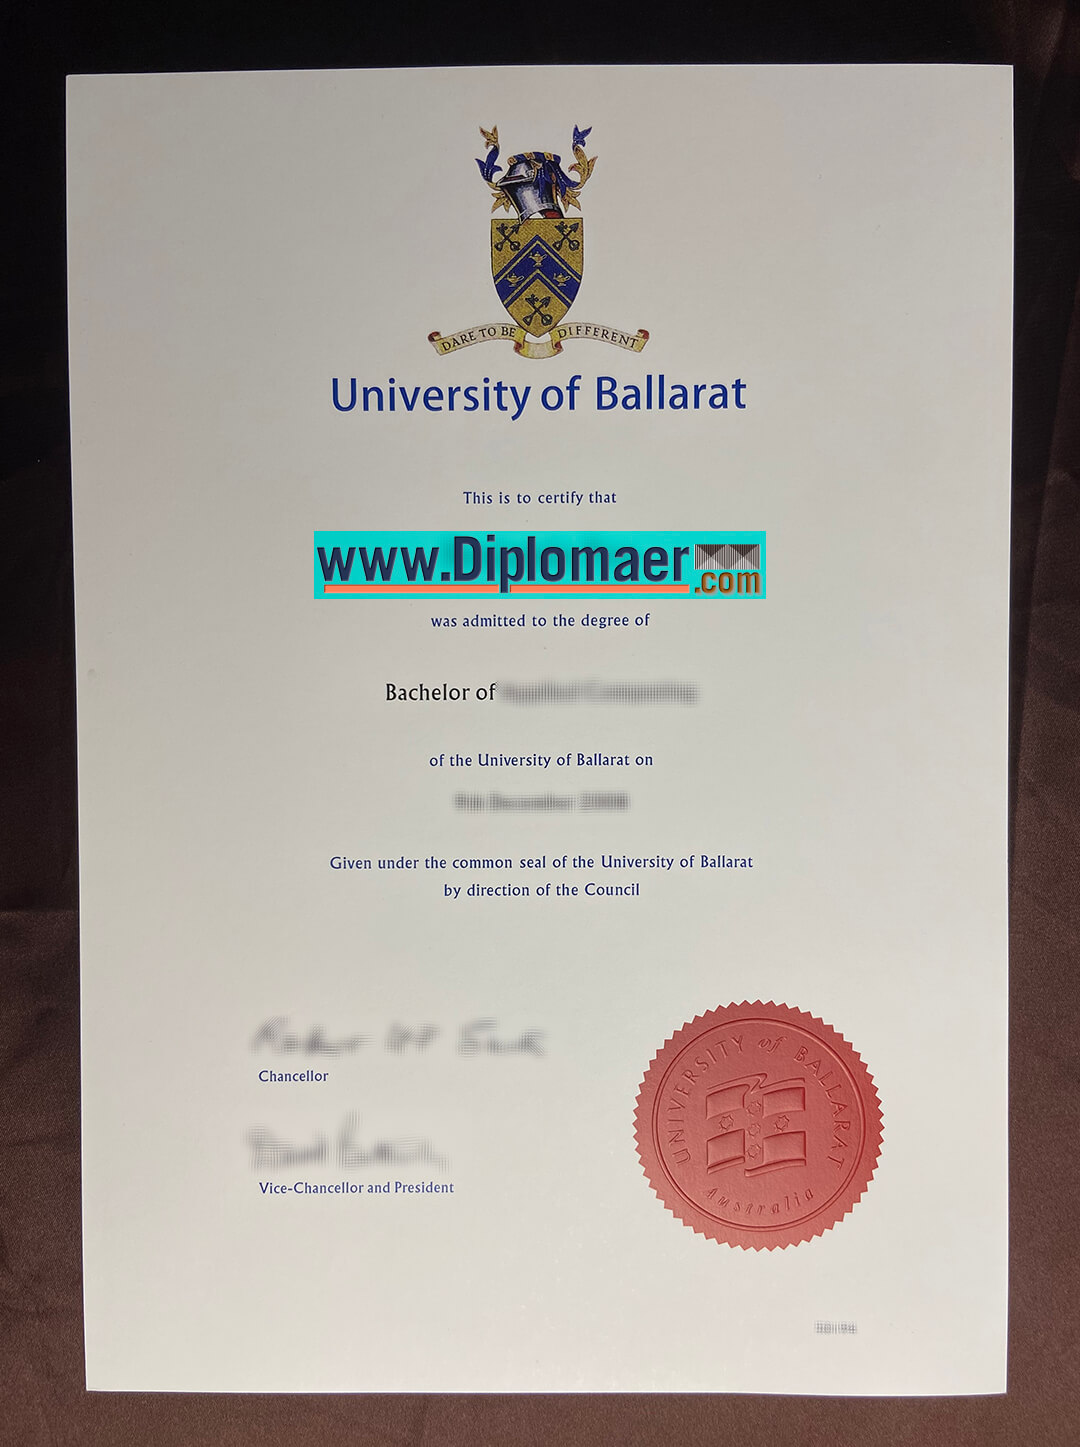 University of Ballarat Fake diploma - Where to purchase a fake bachelor's degree of the University of Ballarat?